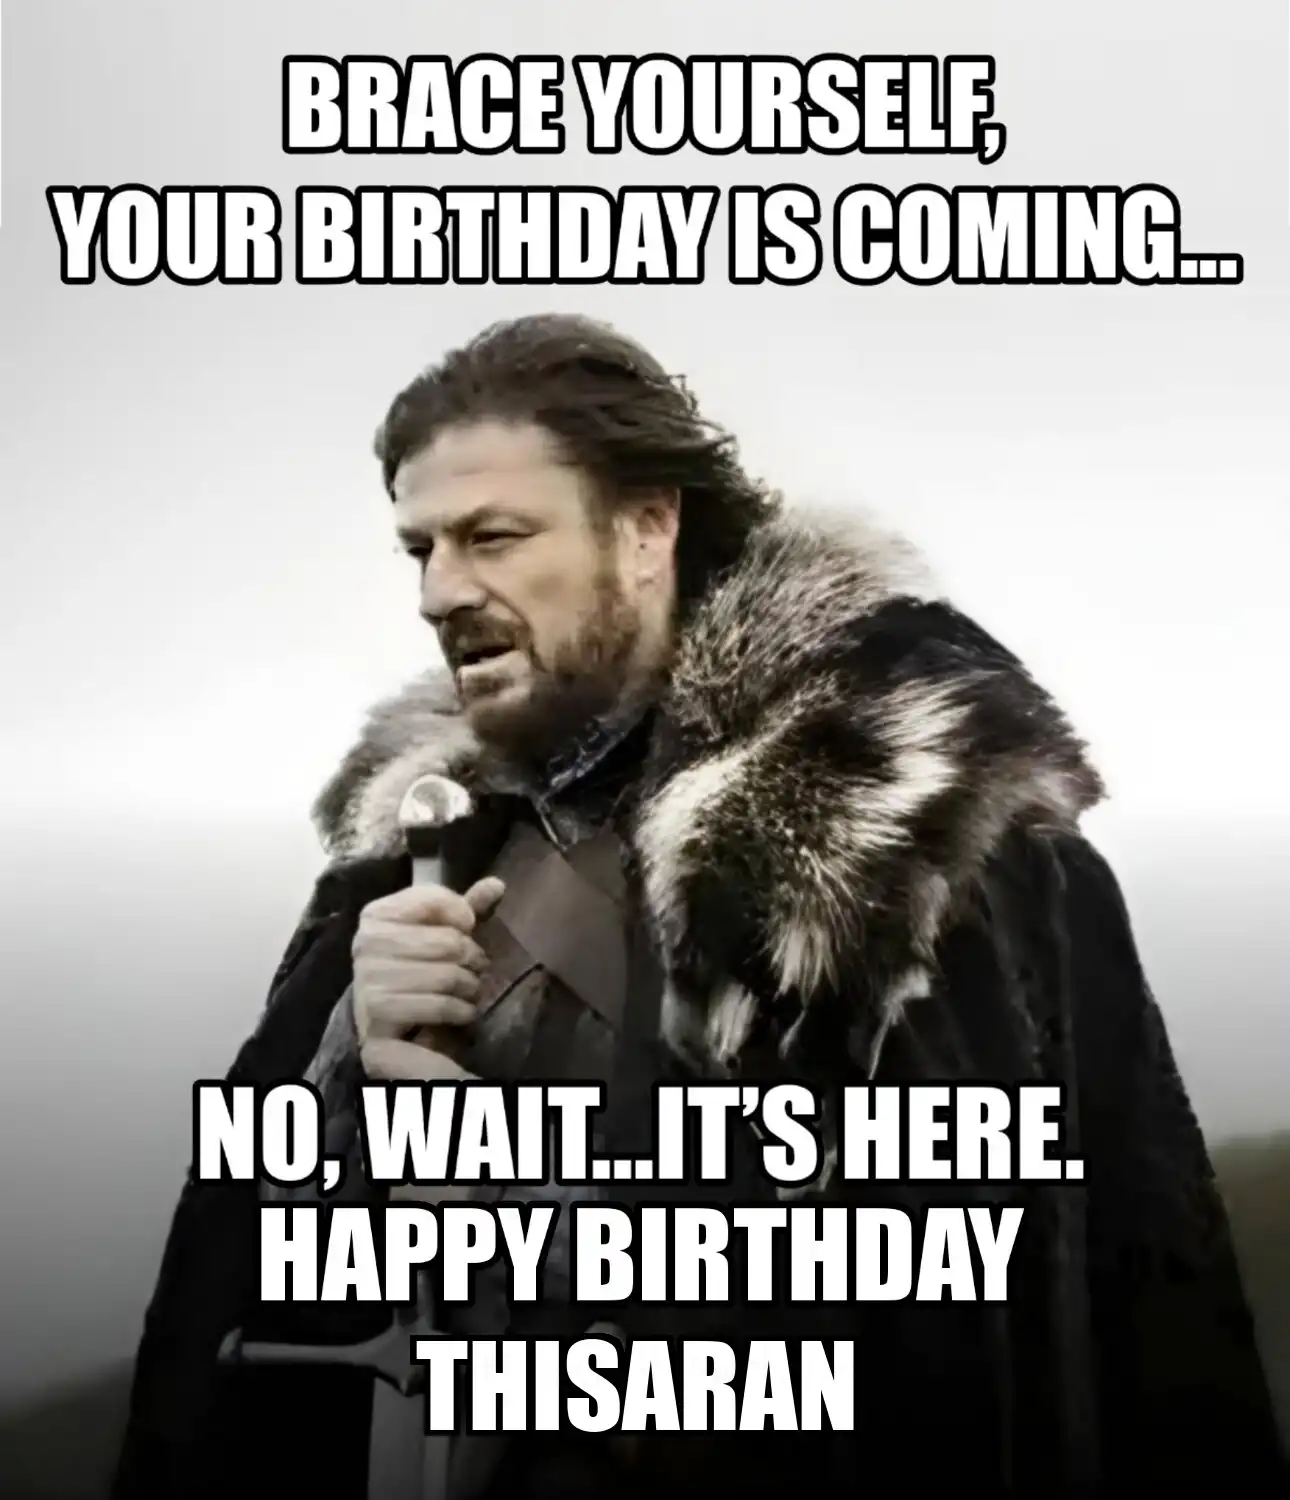 Happy Birthday Thisaran Brace Yourself Your Birthday Is Coming Meme